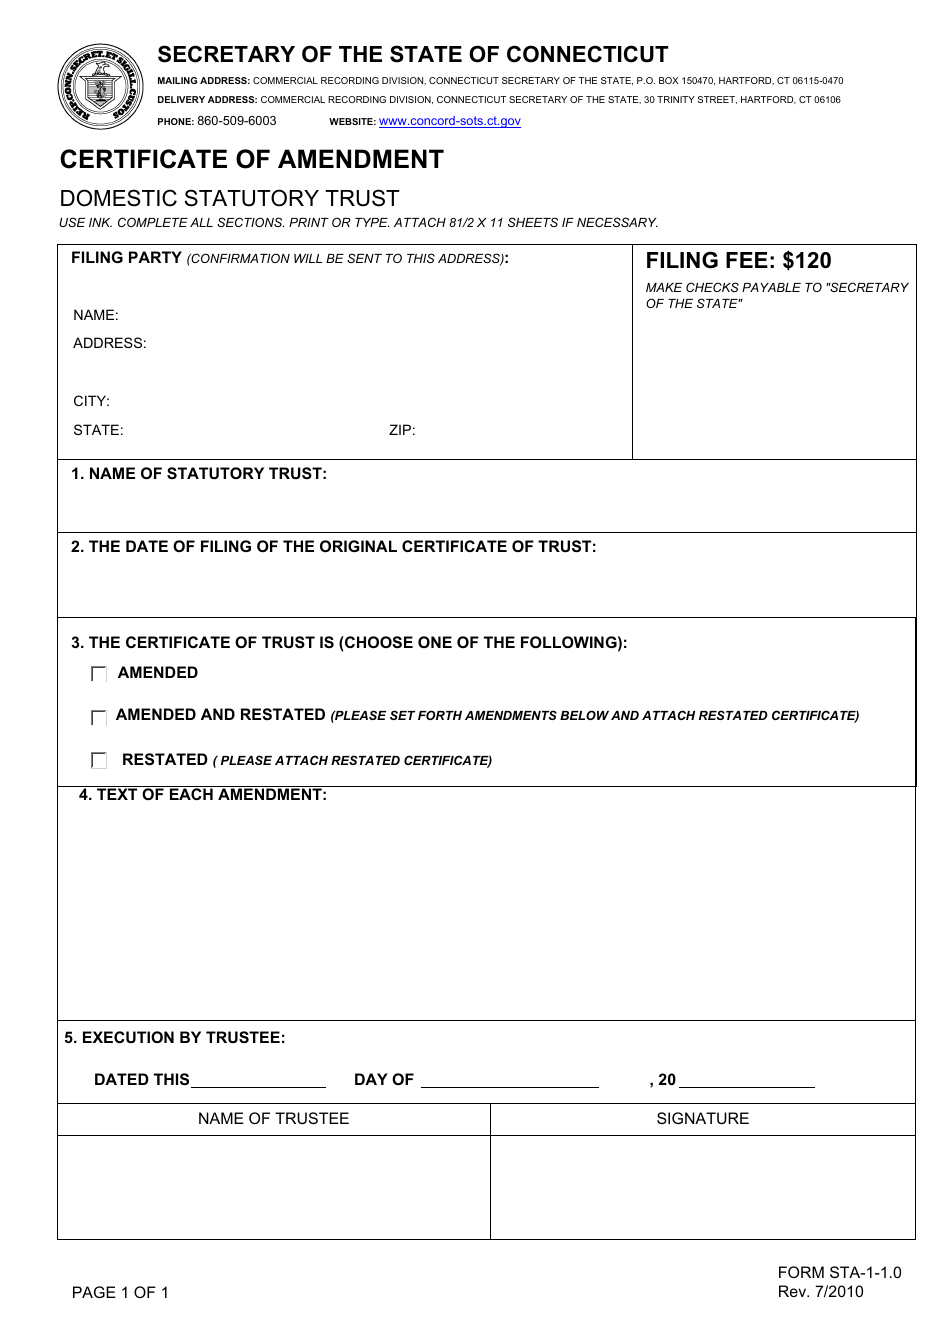 Form STA-1-1.0 Certificate of Amendment - Domestic Statutory Trust - Connecticut, Page 1